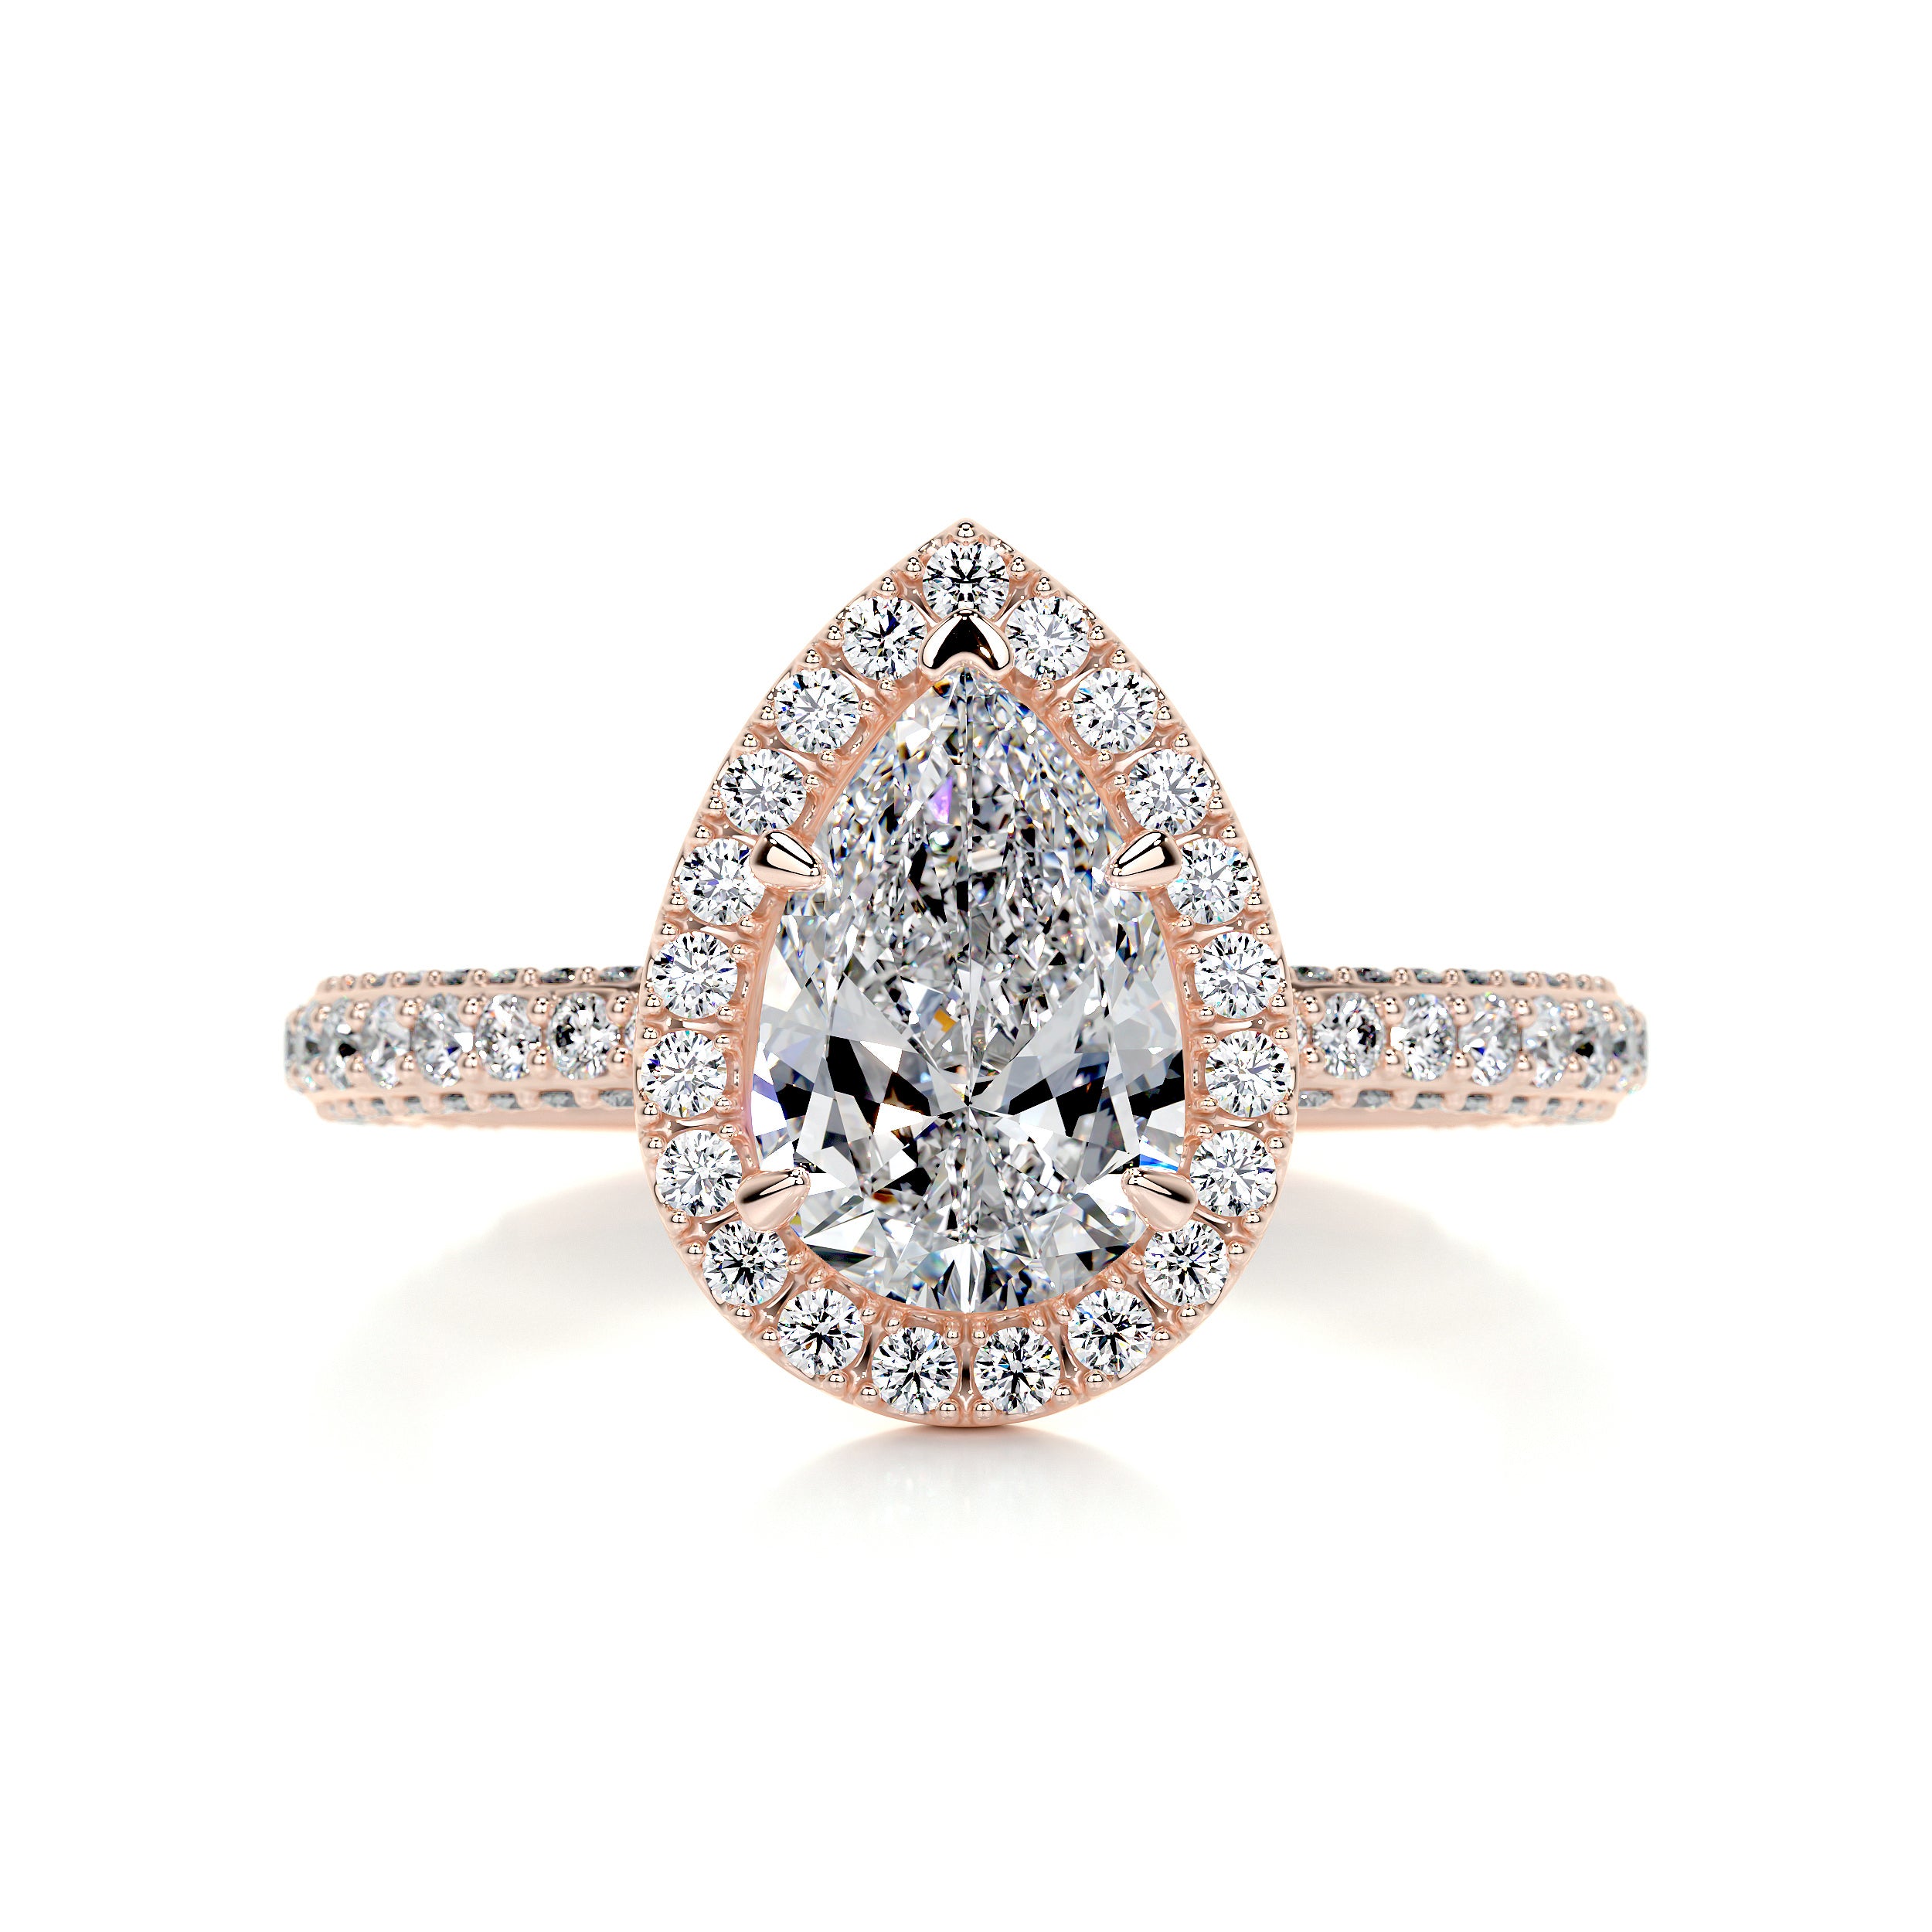 Beverly Diamond Engagement Ring   (2.5 Carat) -14K Rose Gold